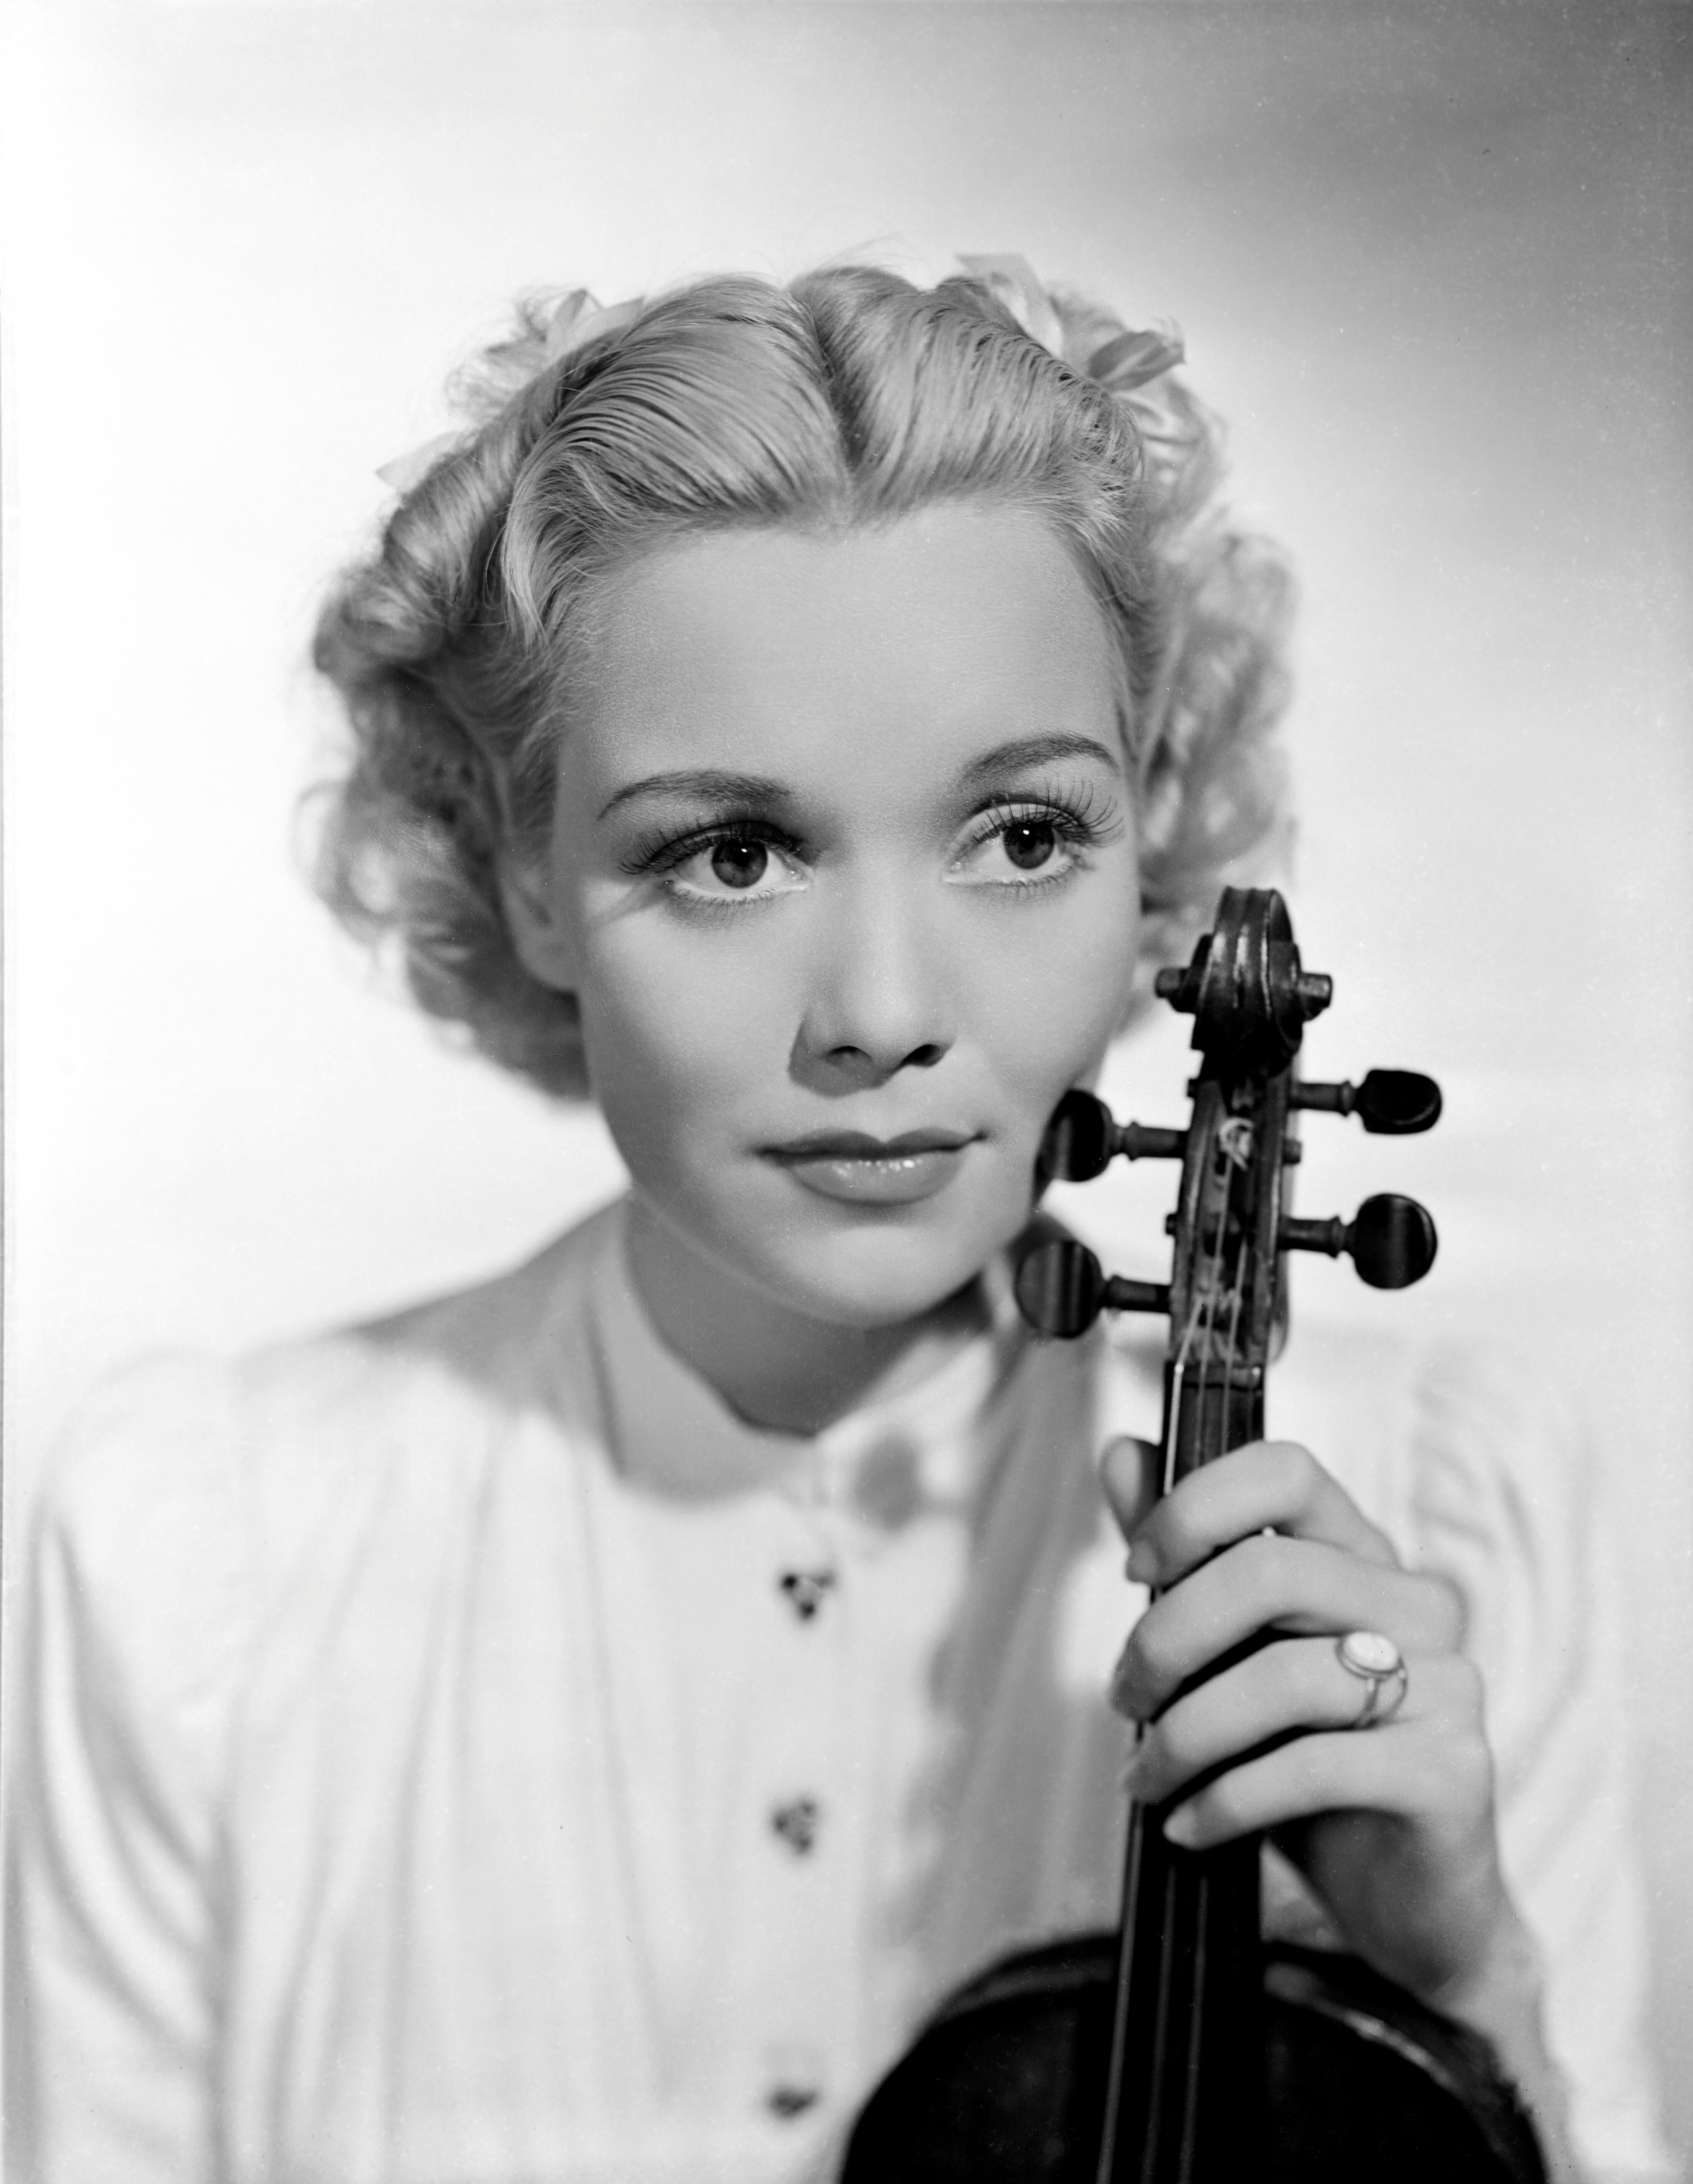 Elmer Fryer Black and White Photograph - Jane Wyman Posed with Violin Movie Star News Fine Art Print